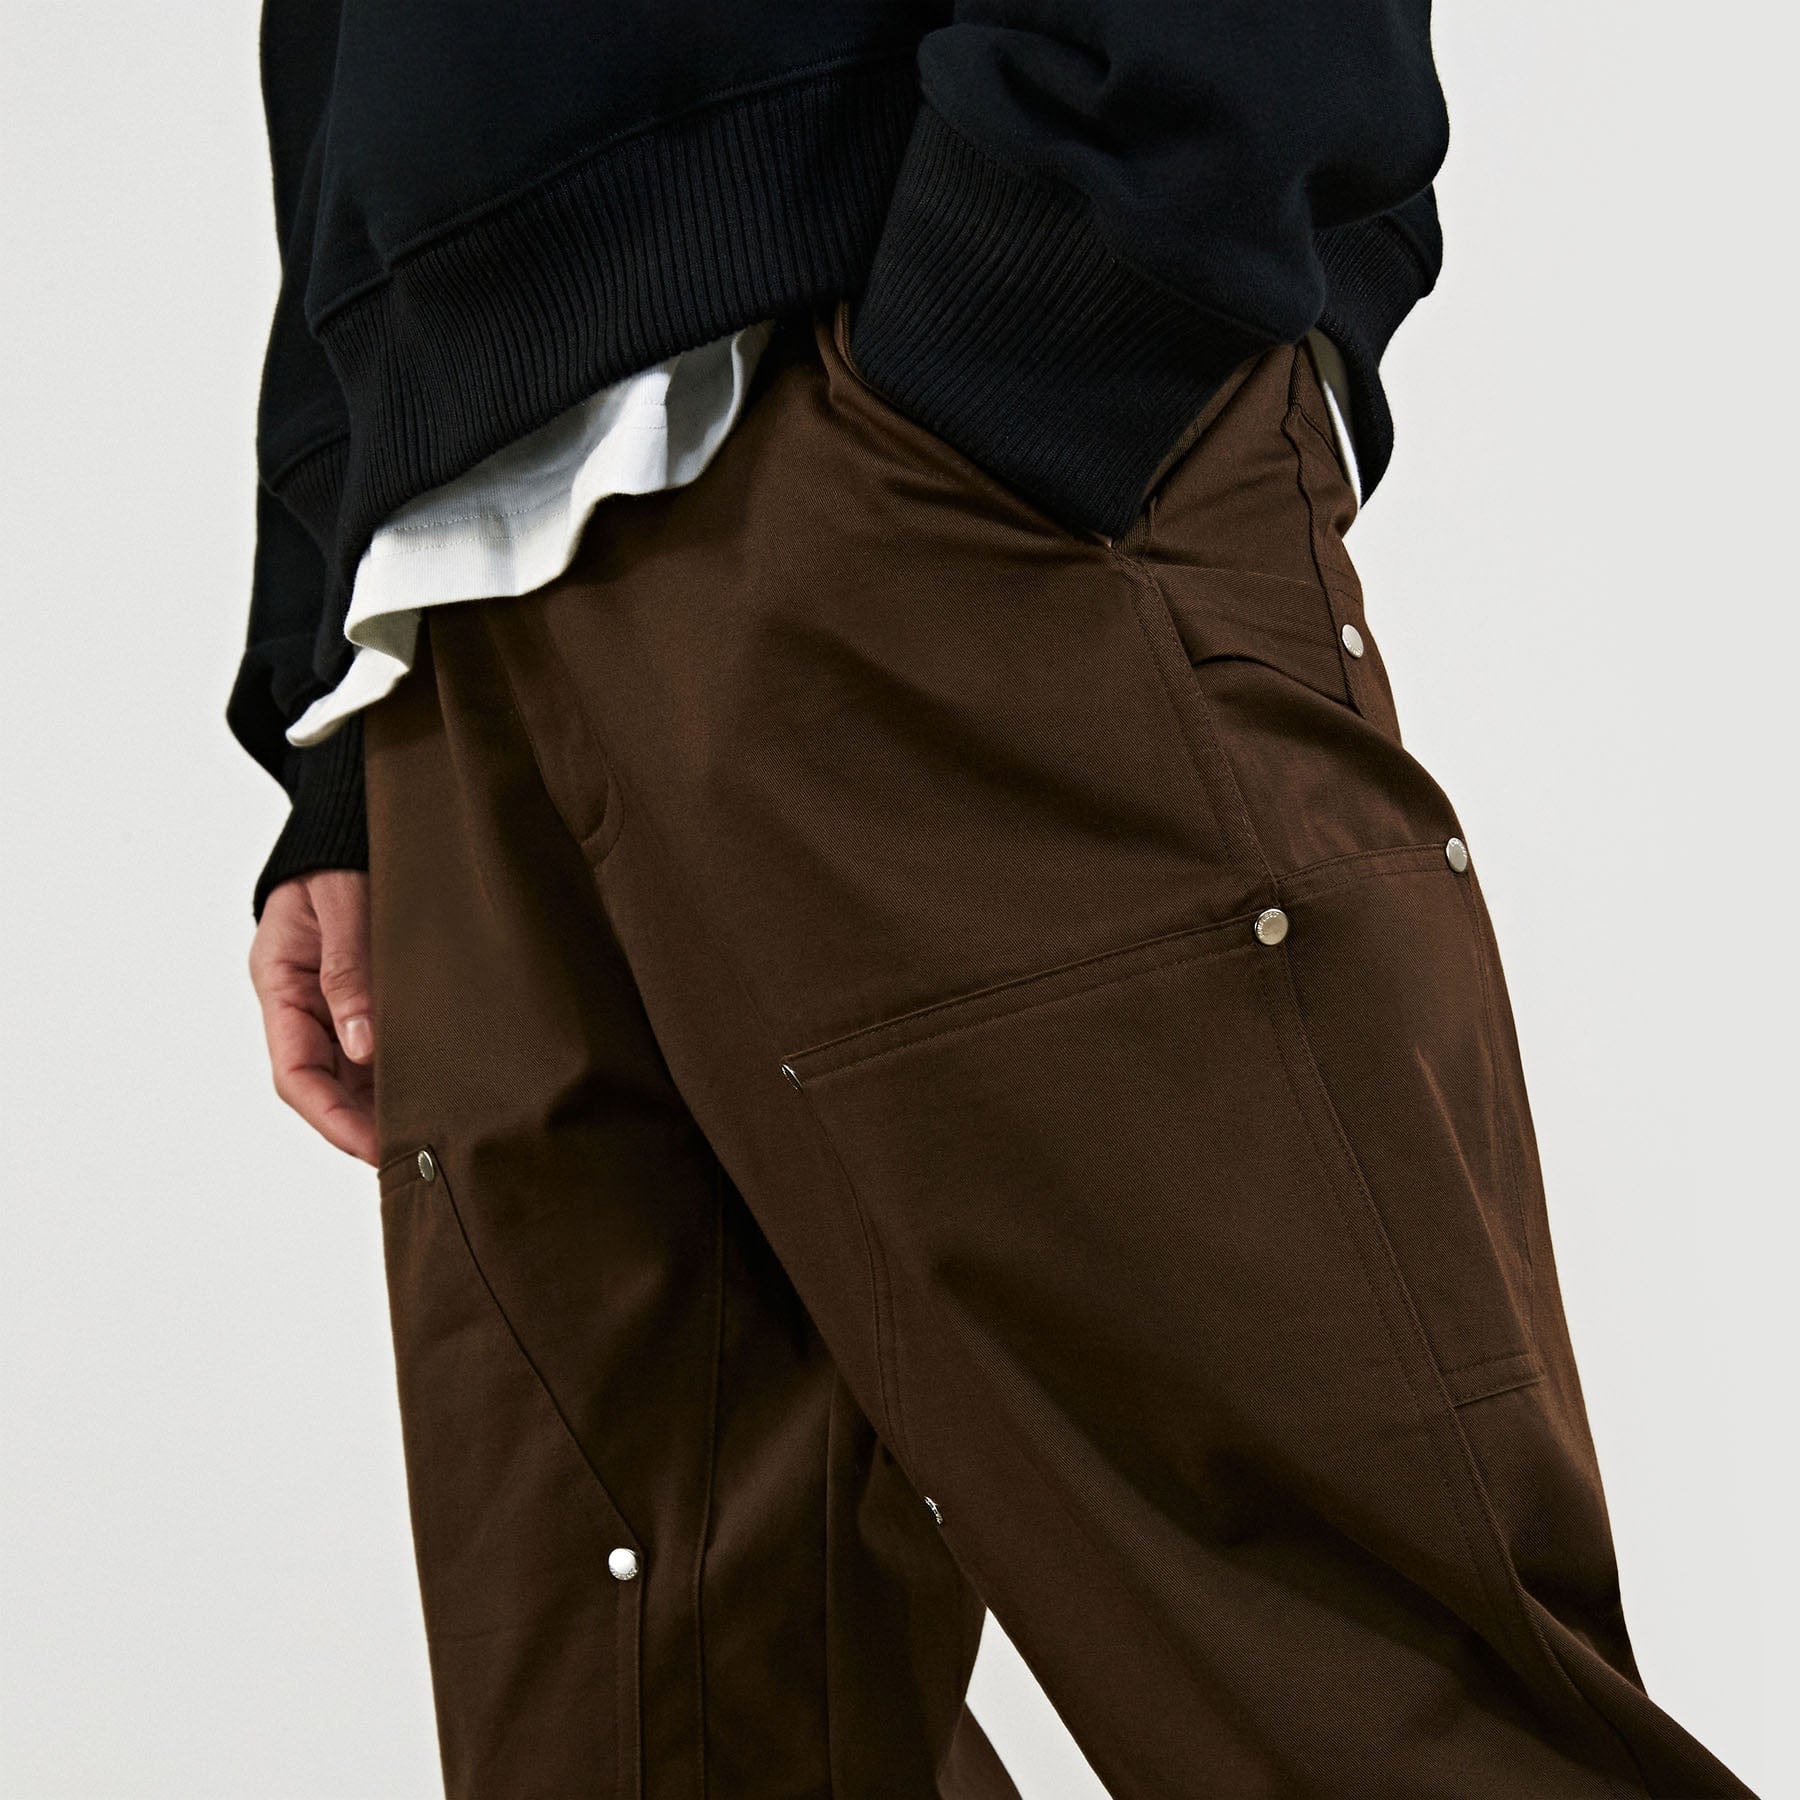 BONELESS Rivet Double-layered Back Zipper Pants - PROJECTISR US